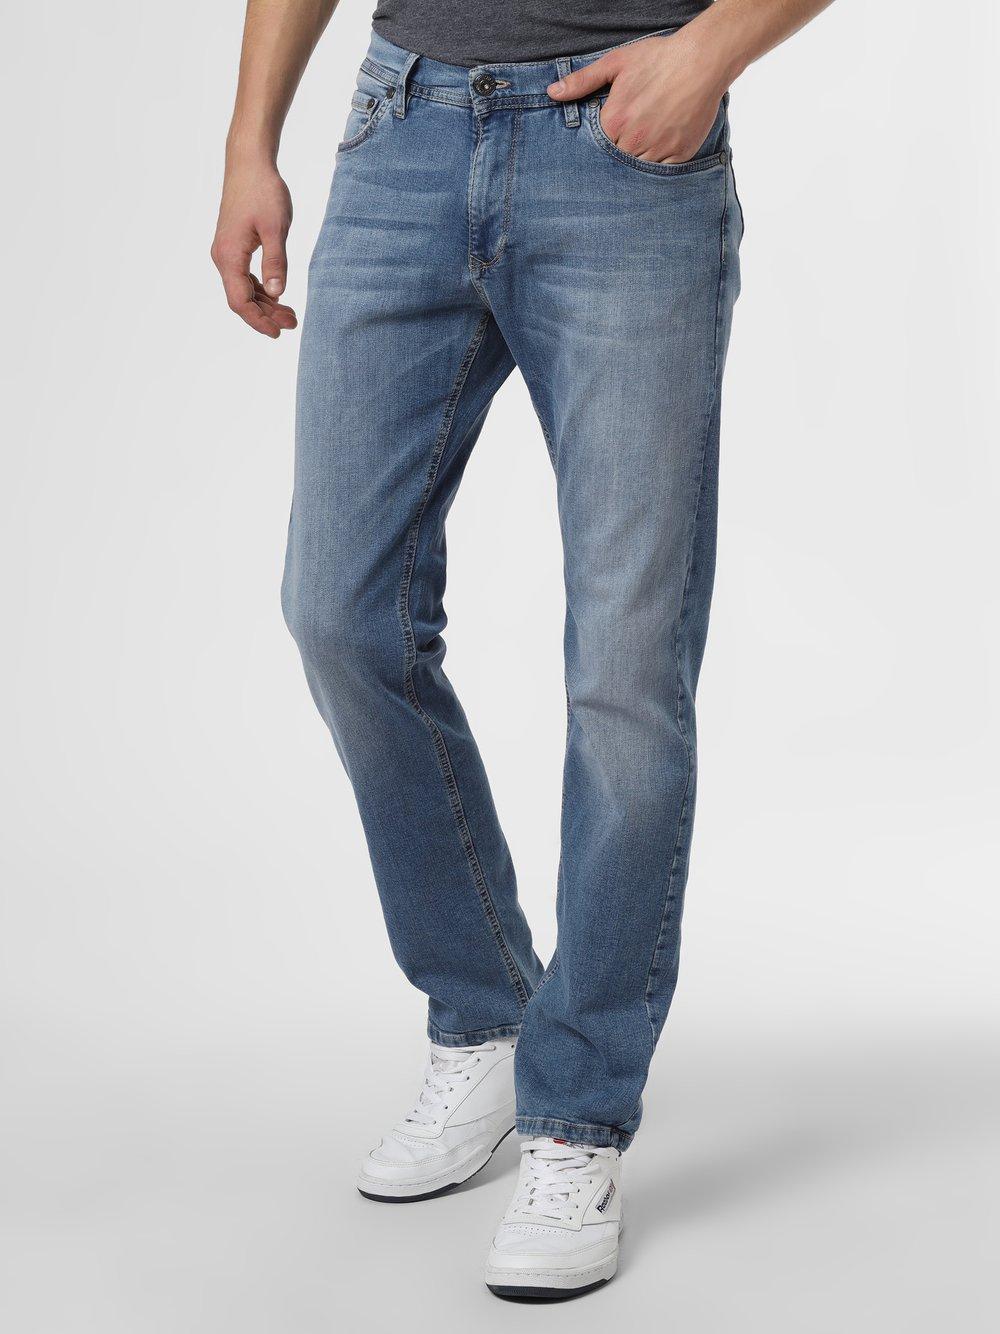 Finshley & Harding Jeans Herren, bleached von Finshley & Harding